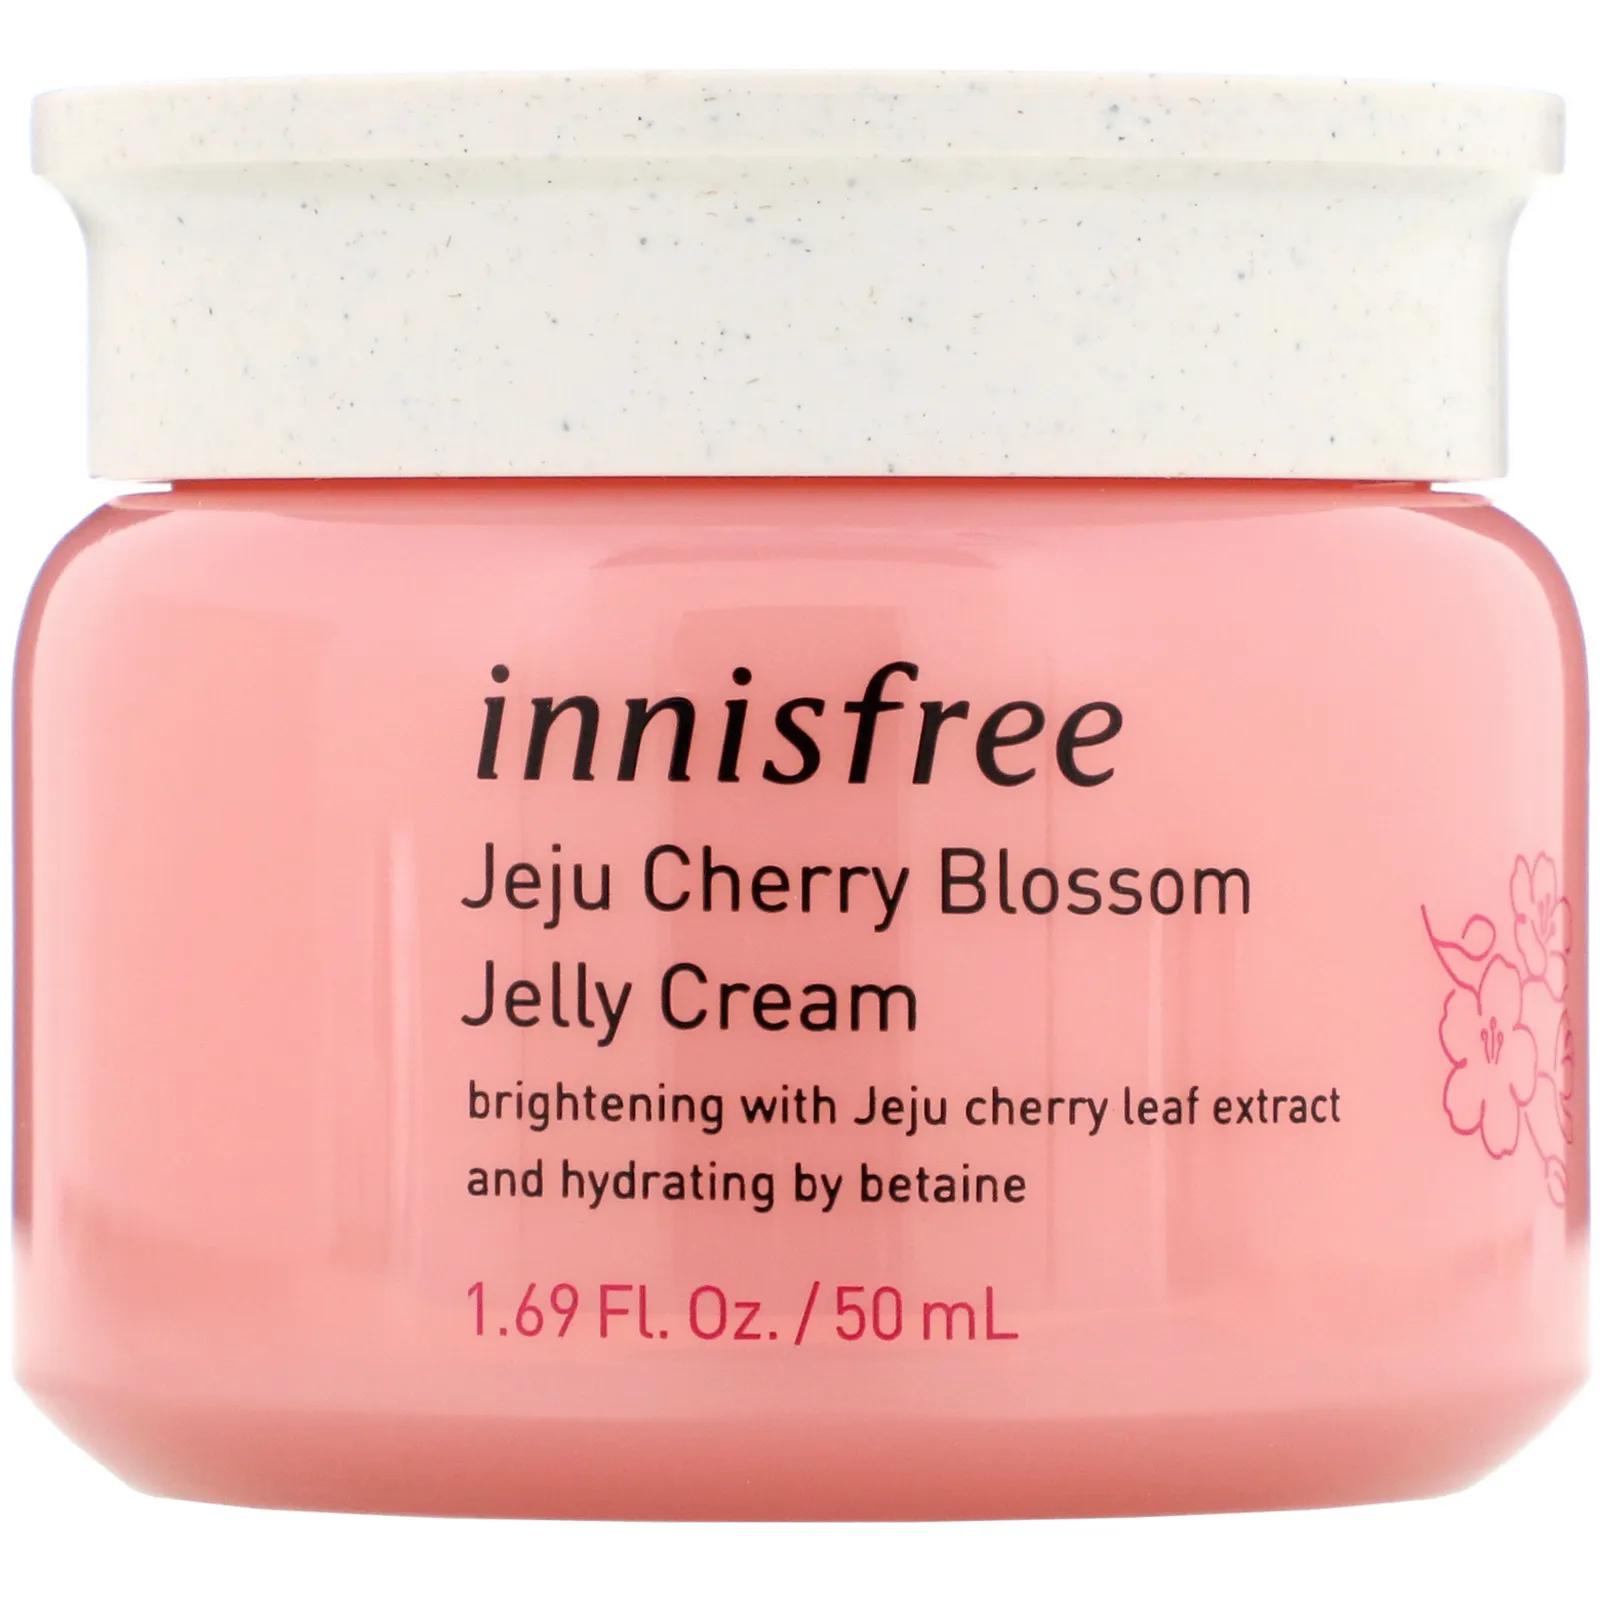 Innisfree, Jeju Cherry Blossom Jelly Cream, 1.69 fl oz (50 ml) - iHerb